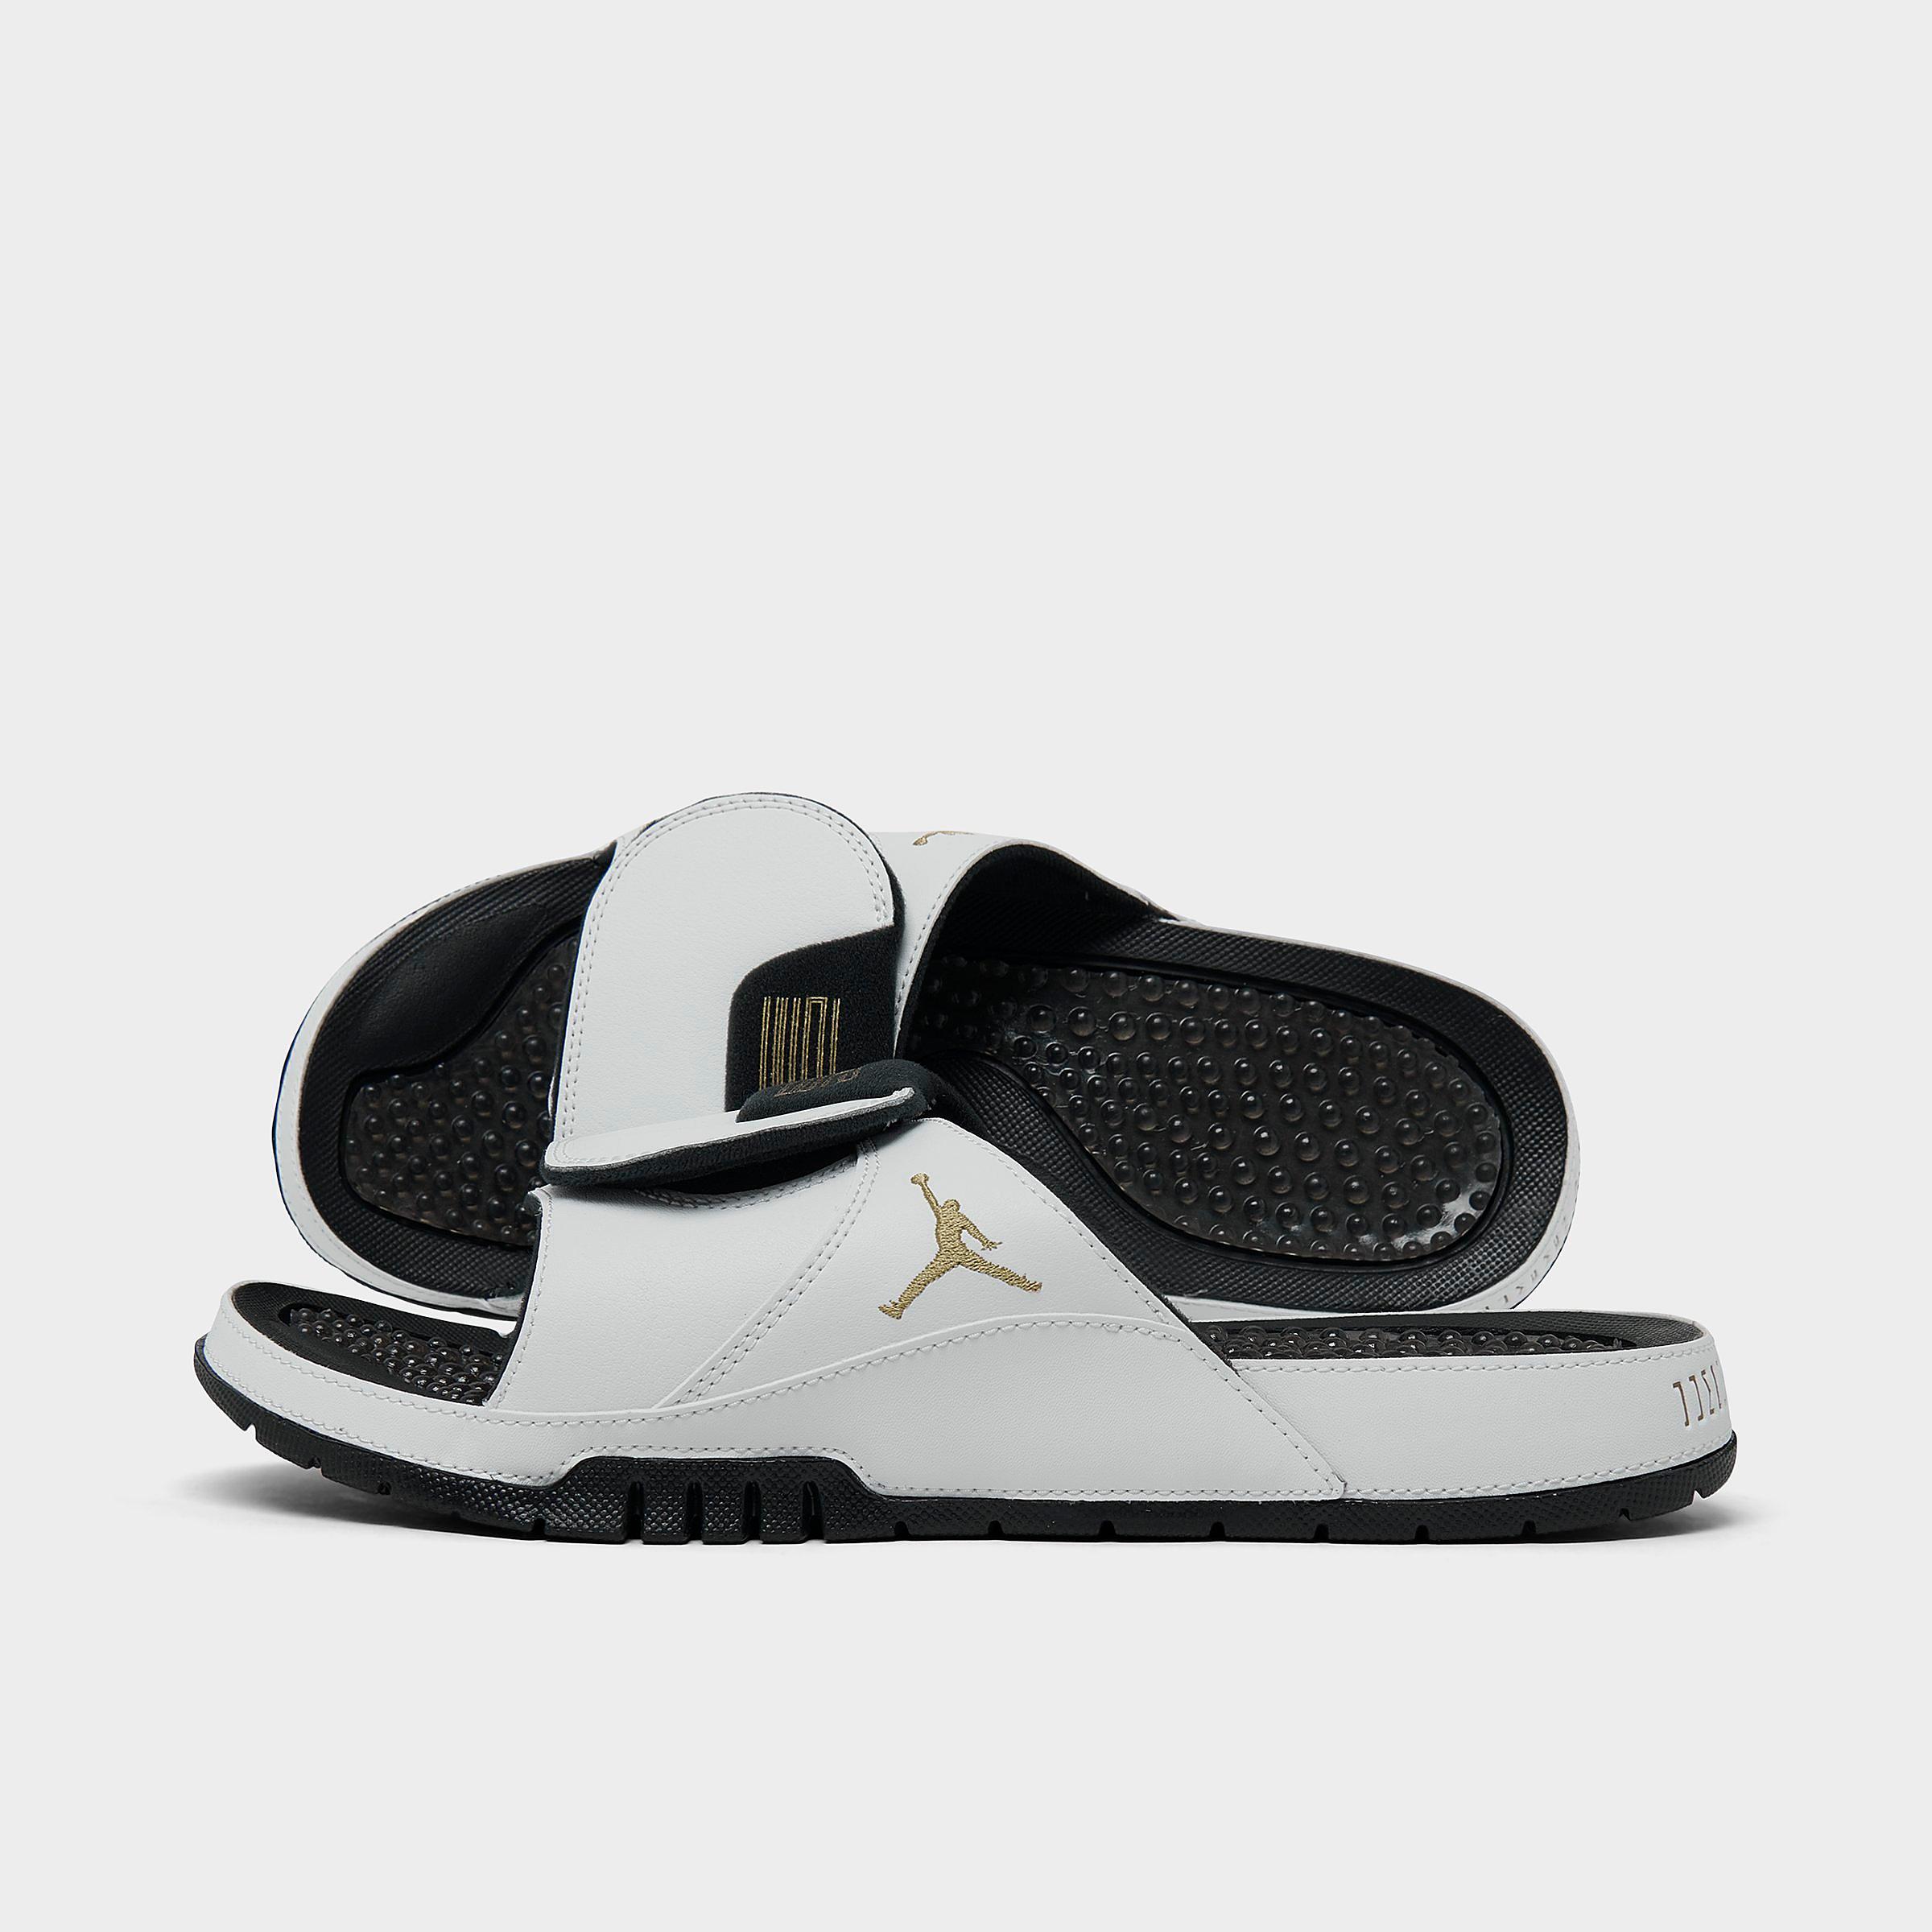 Mens Jordan Hydro 11 Retro Slide Sandals